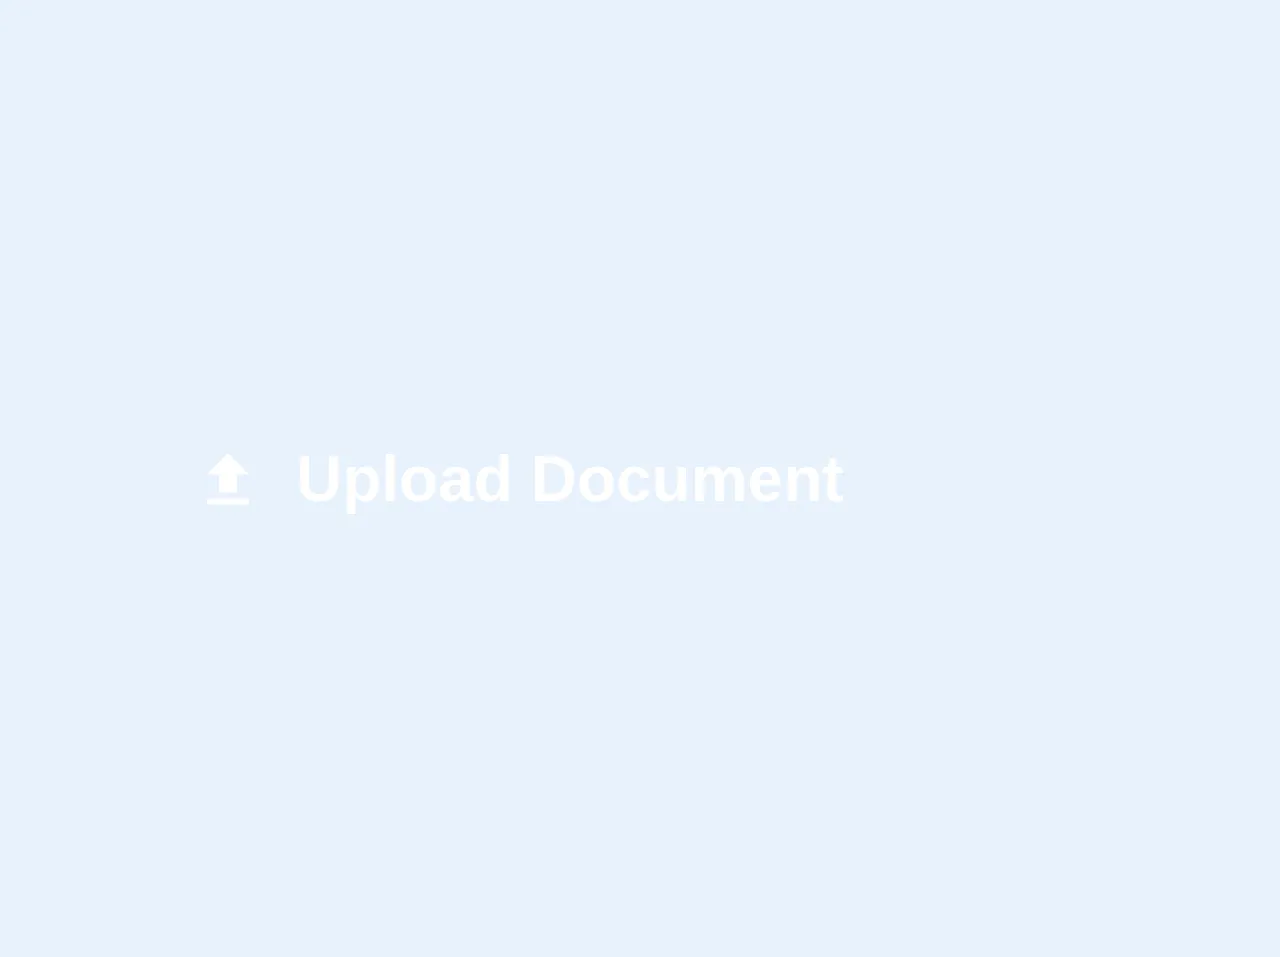 File Upload button